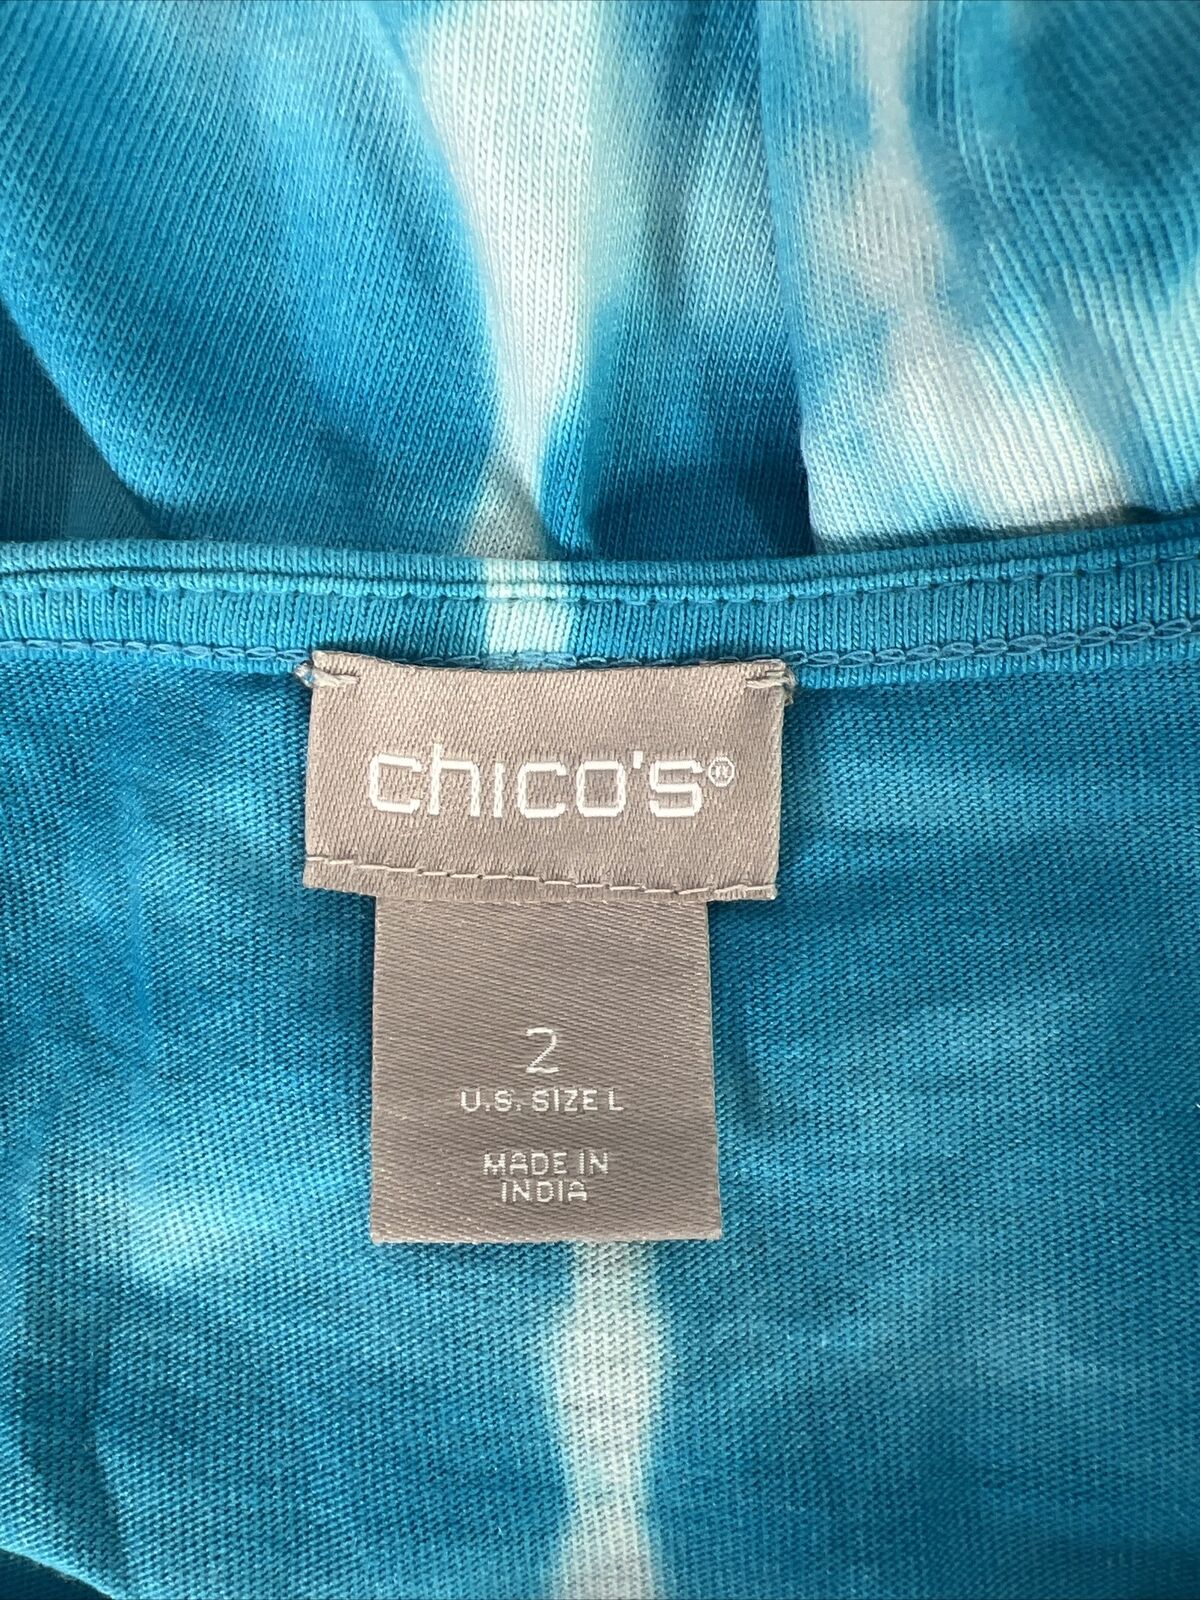 Chicos Women's Blue/White Tie Dye 3/4 Sleeve Tie Front T-Shirt - 2/L